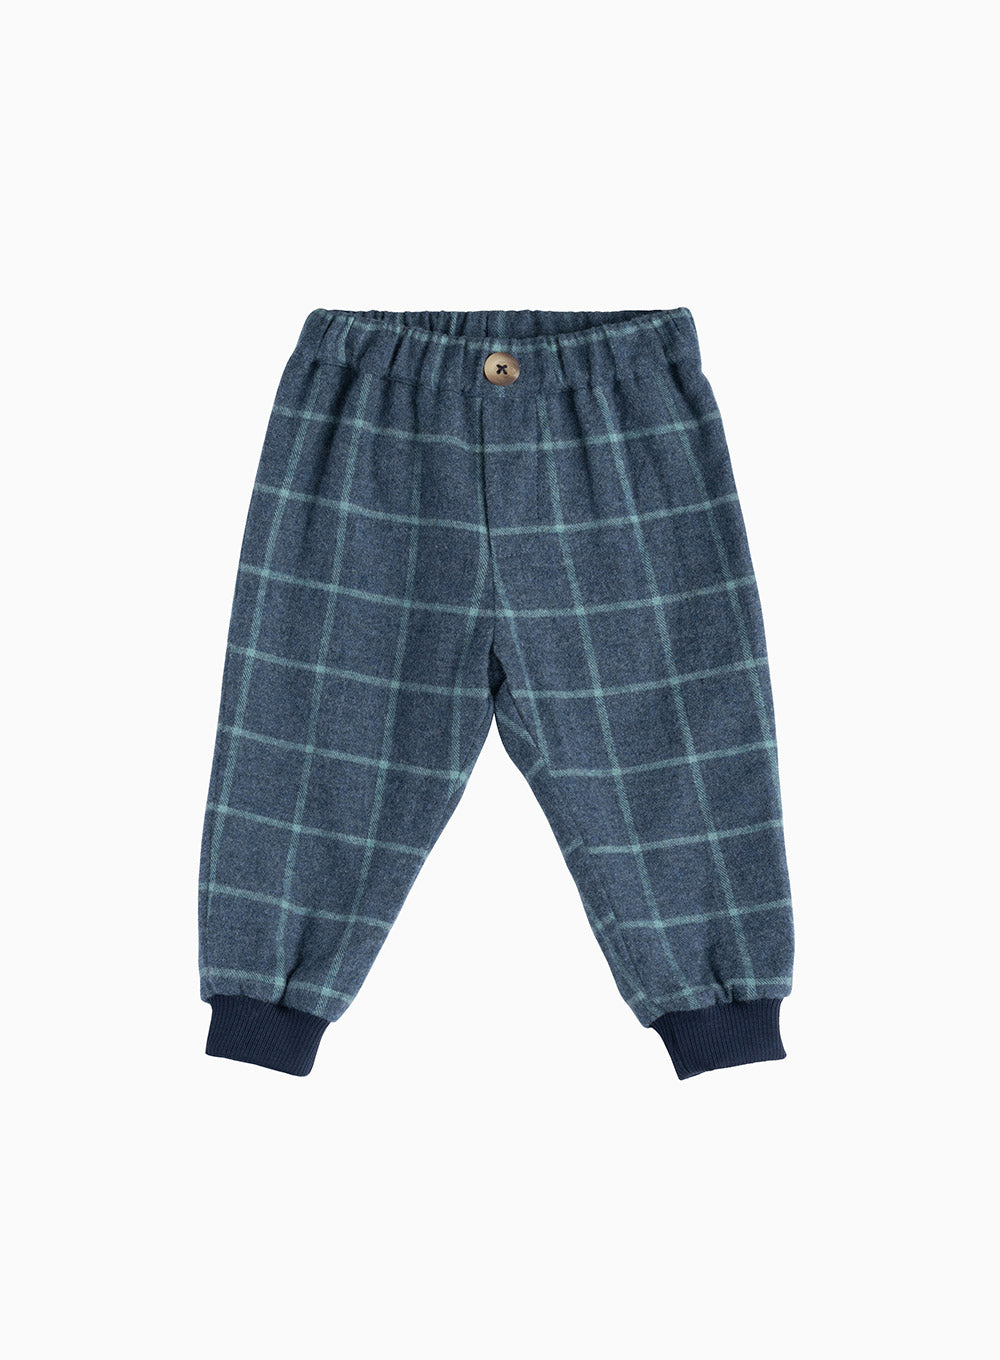 Buy GINI & JONY Navy Boys 5 Pocket Check Pants | Shoppers Stop